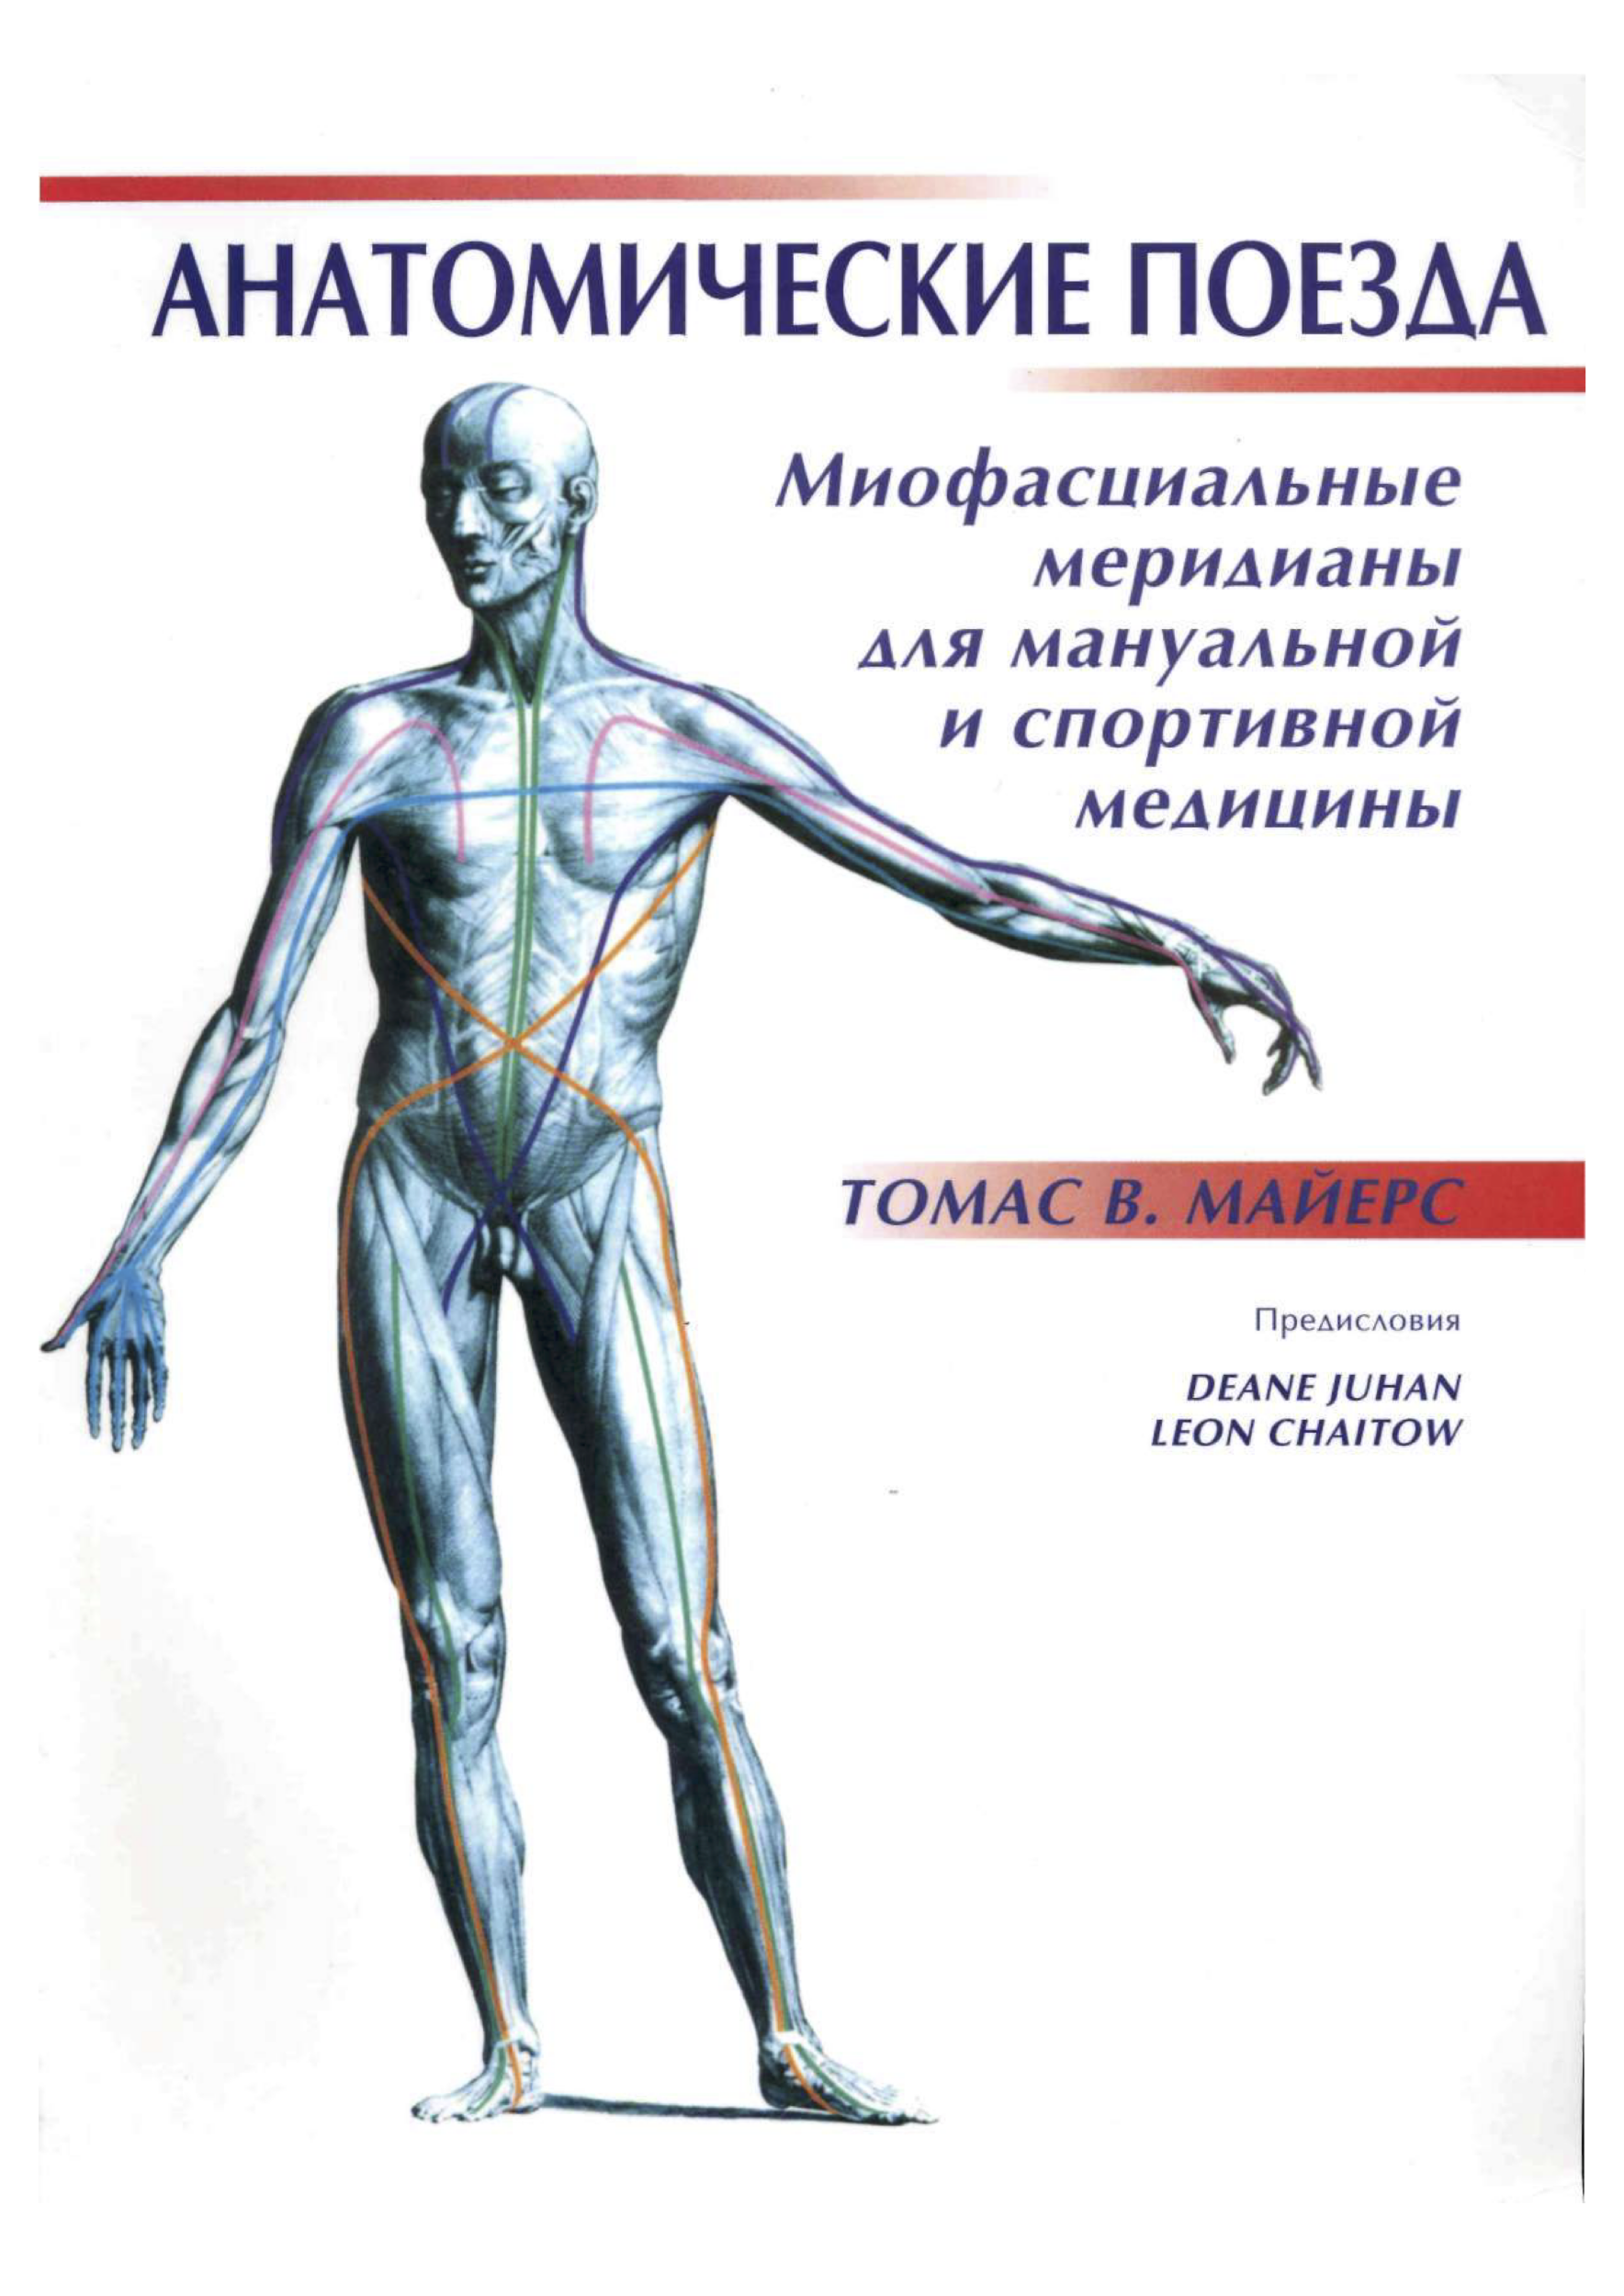 Анатомические поезда. Томас В. Майерс (2007). Автор — Томас Маєрс. 